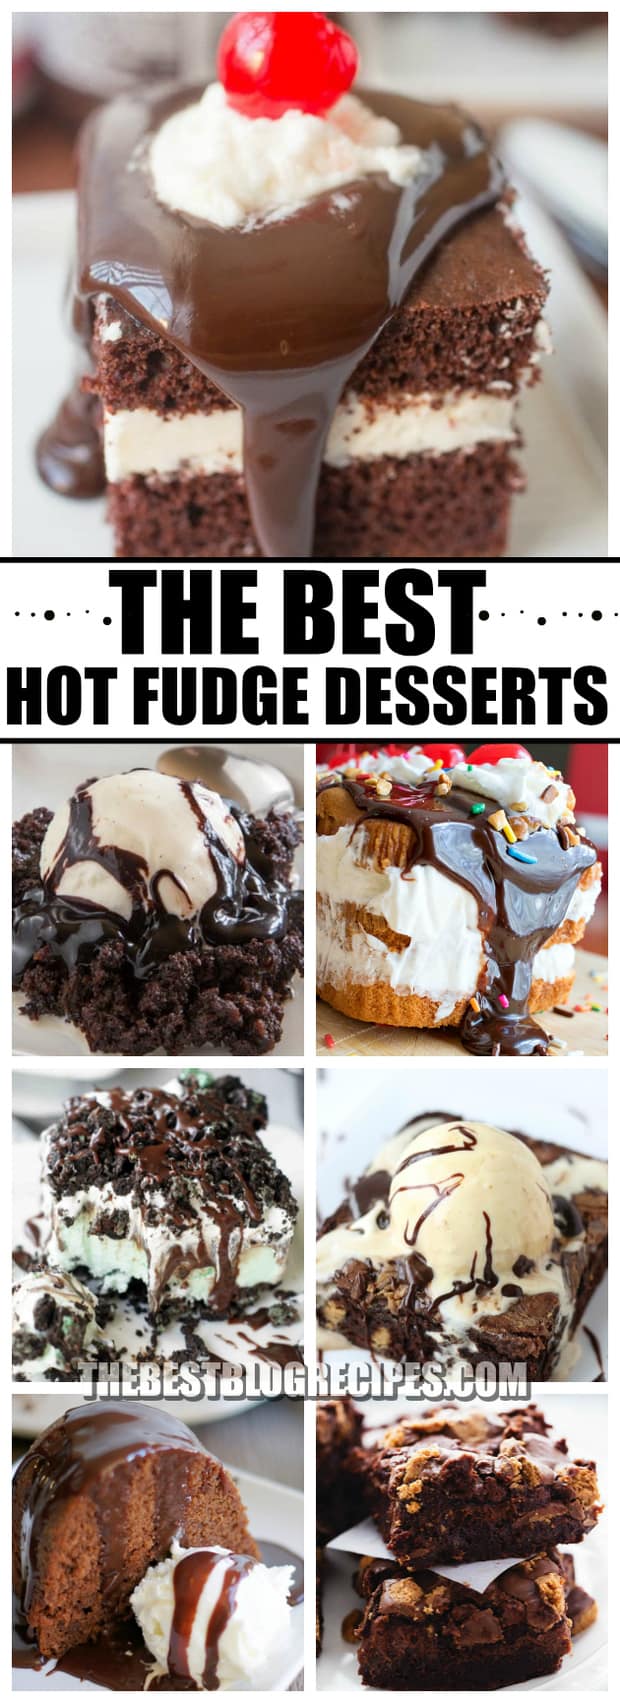 The Best Hot Fudge Desserts